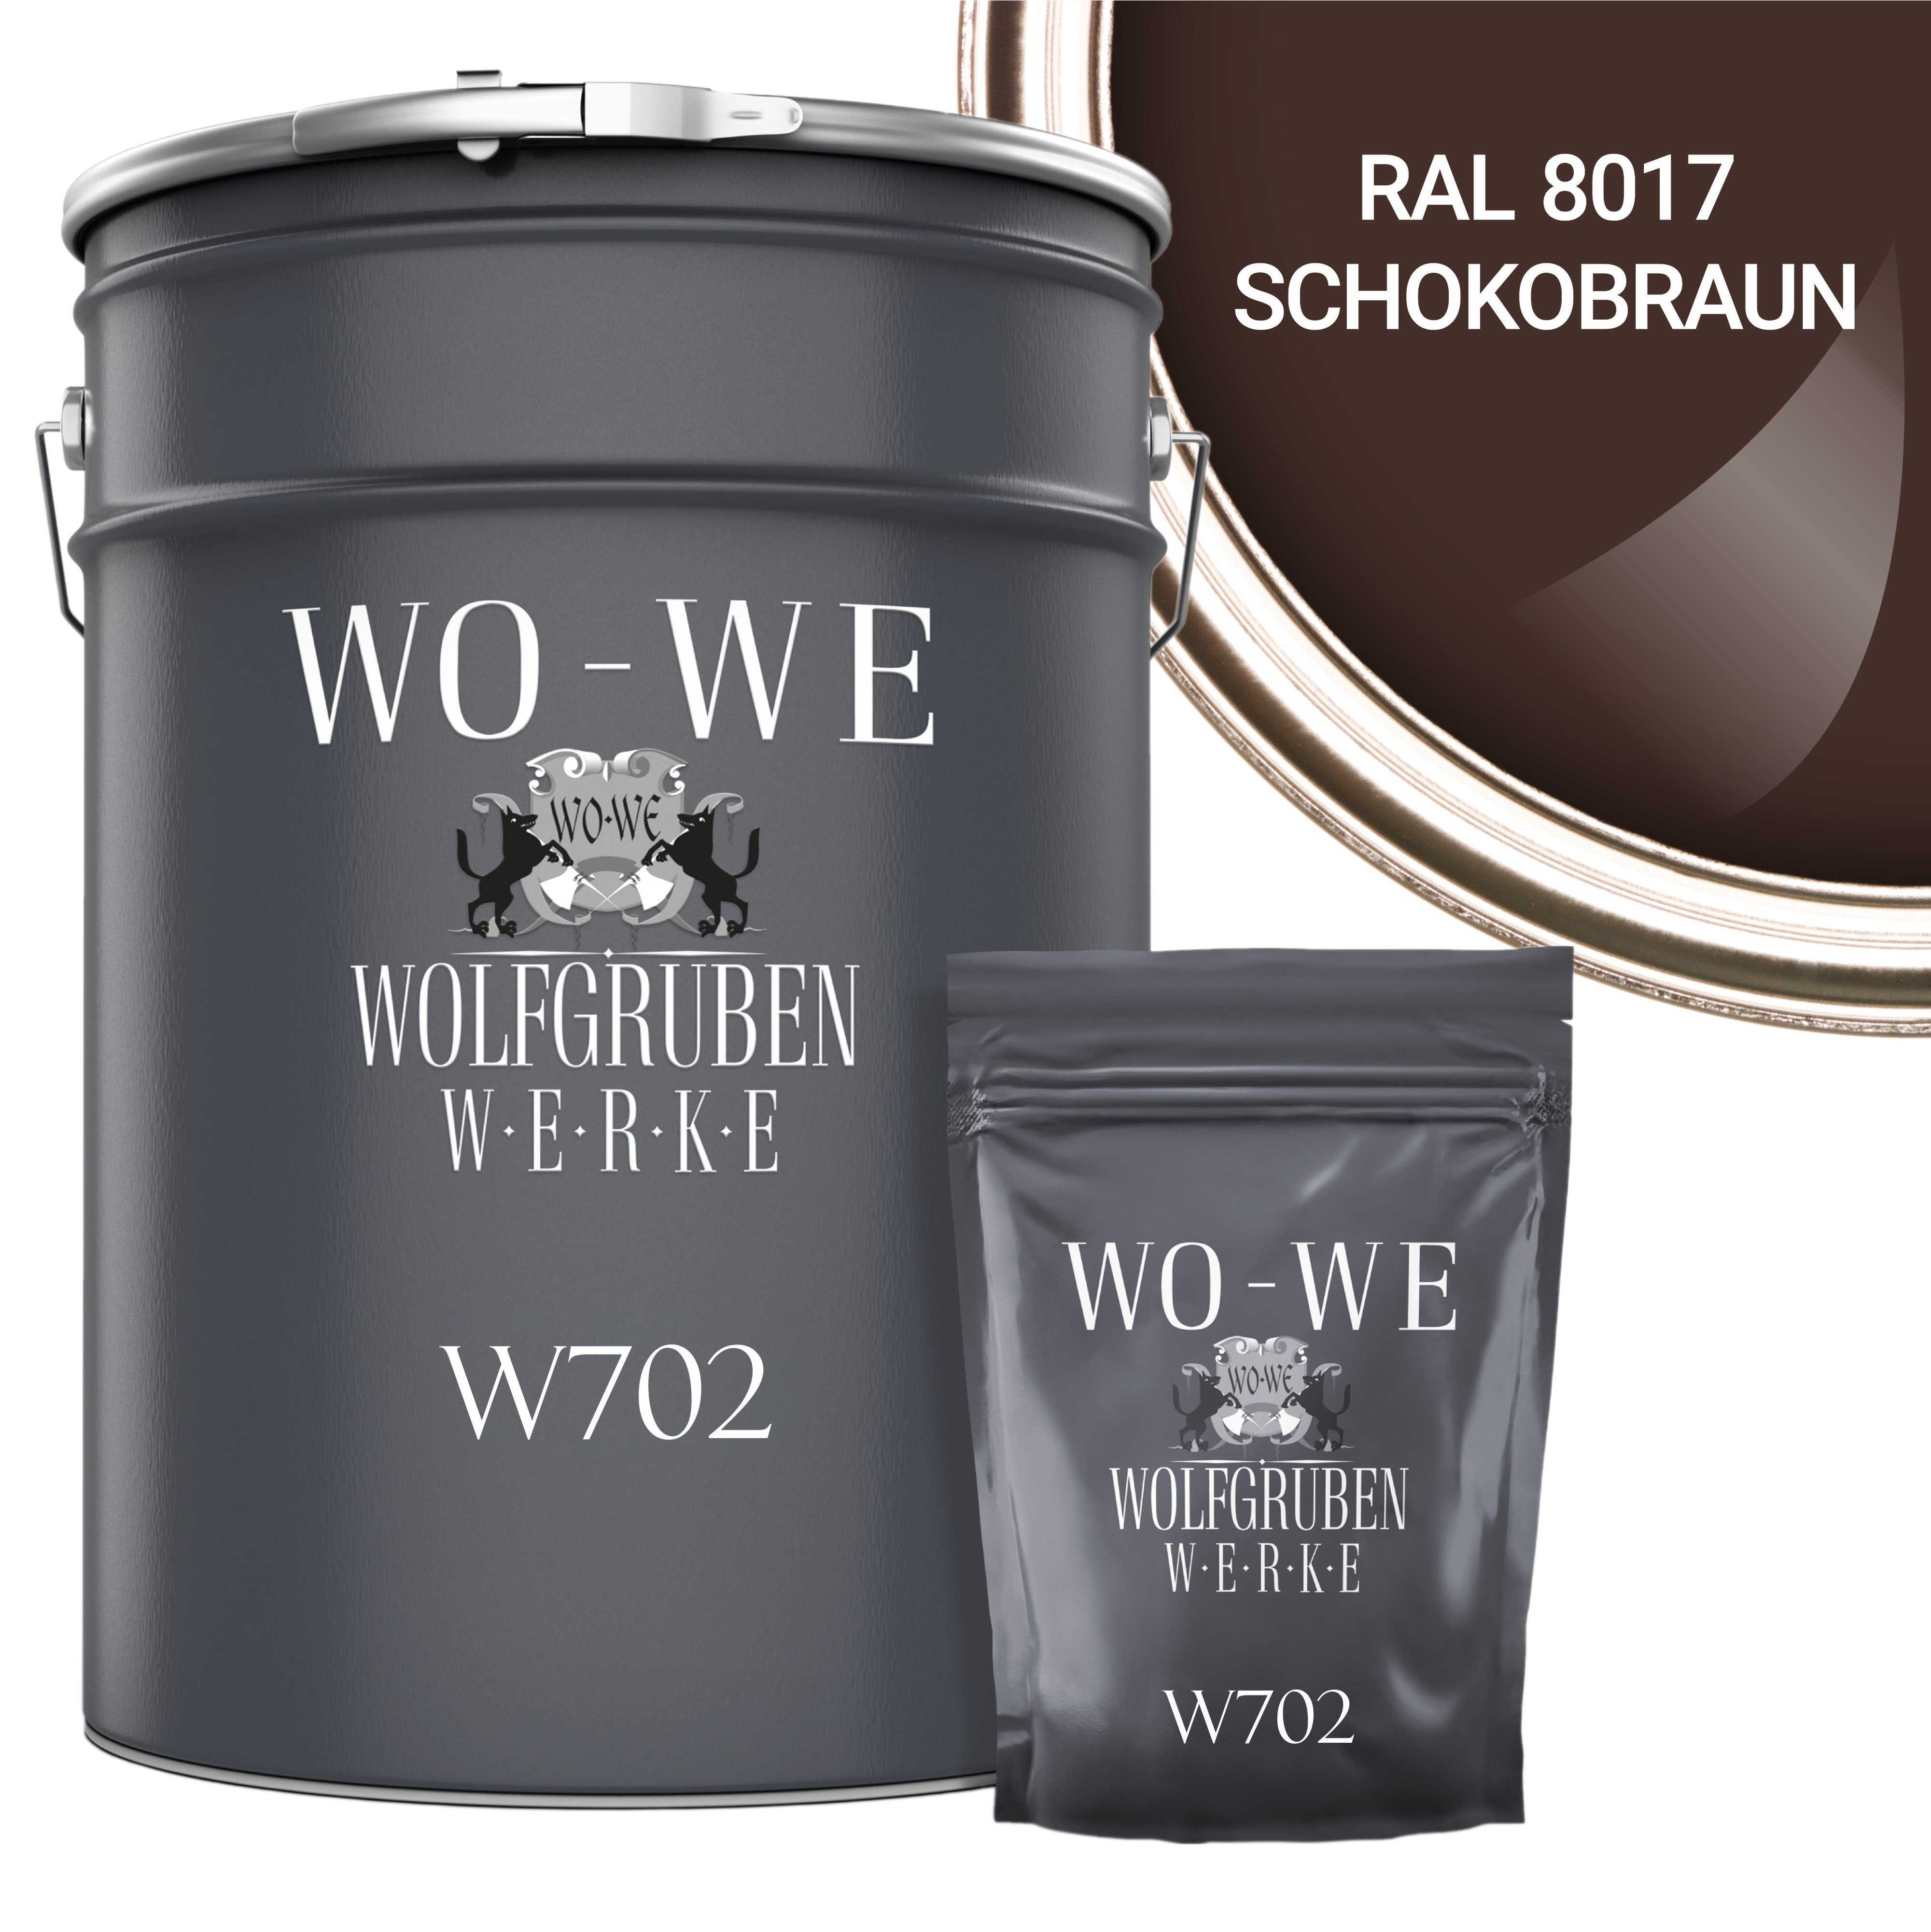 WO-WE Bodenversiegelung 2K Bodenbeschichtung 2,5-20Kg, RAL Schokoladenbraun Epoxidharz W702, Garagenfarbe Seidenglänzend, 8017